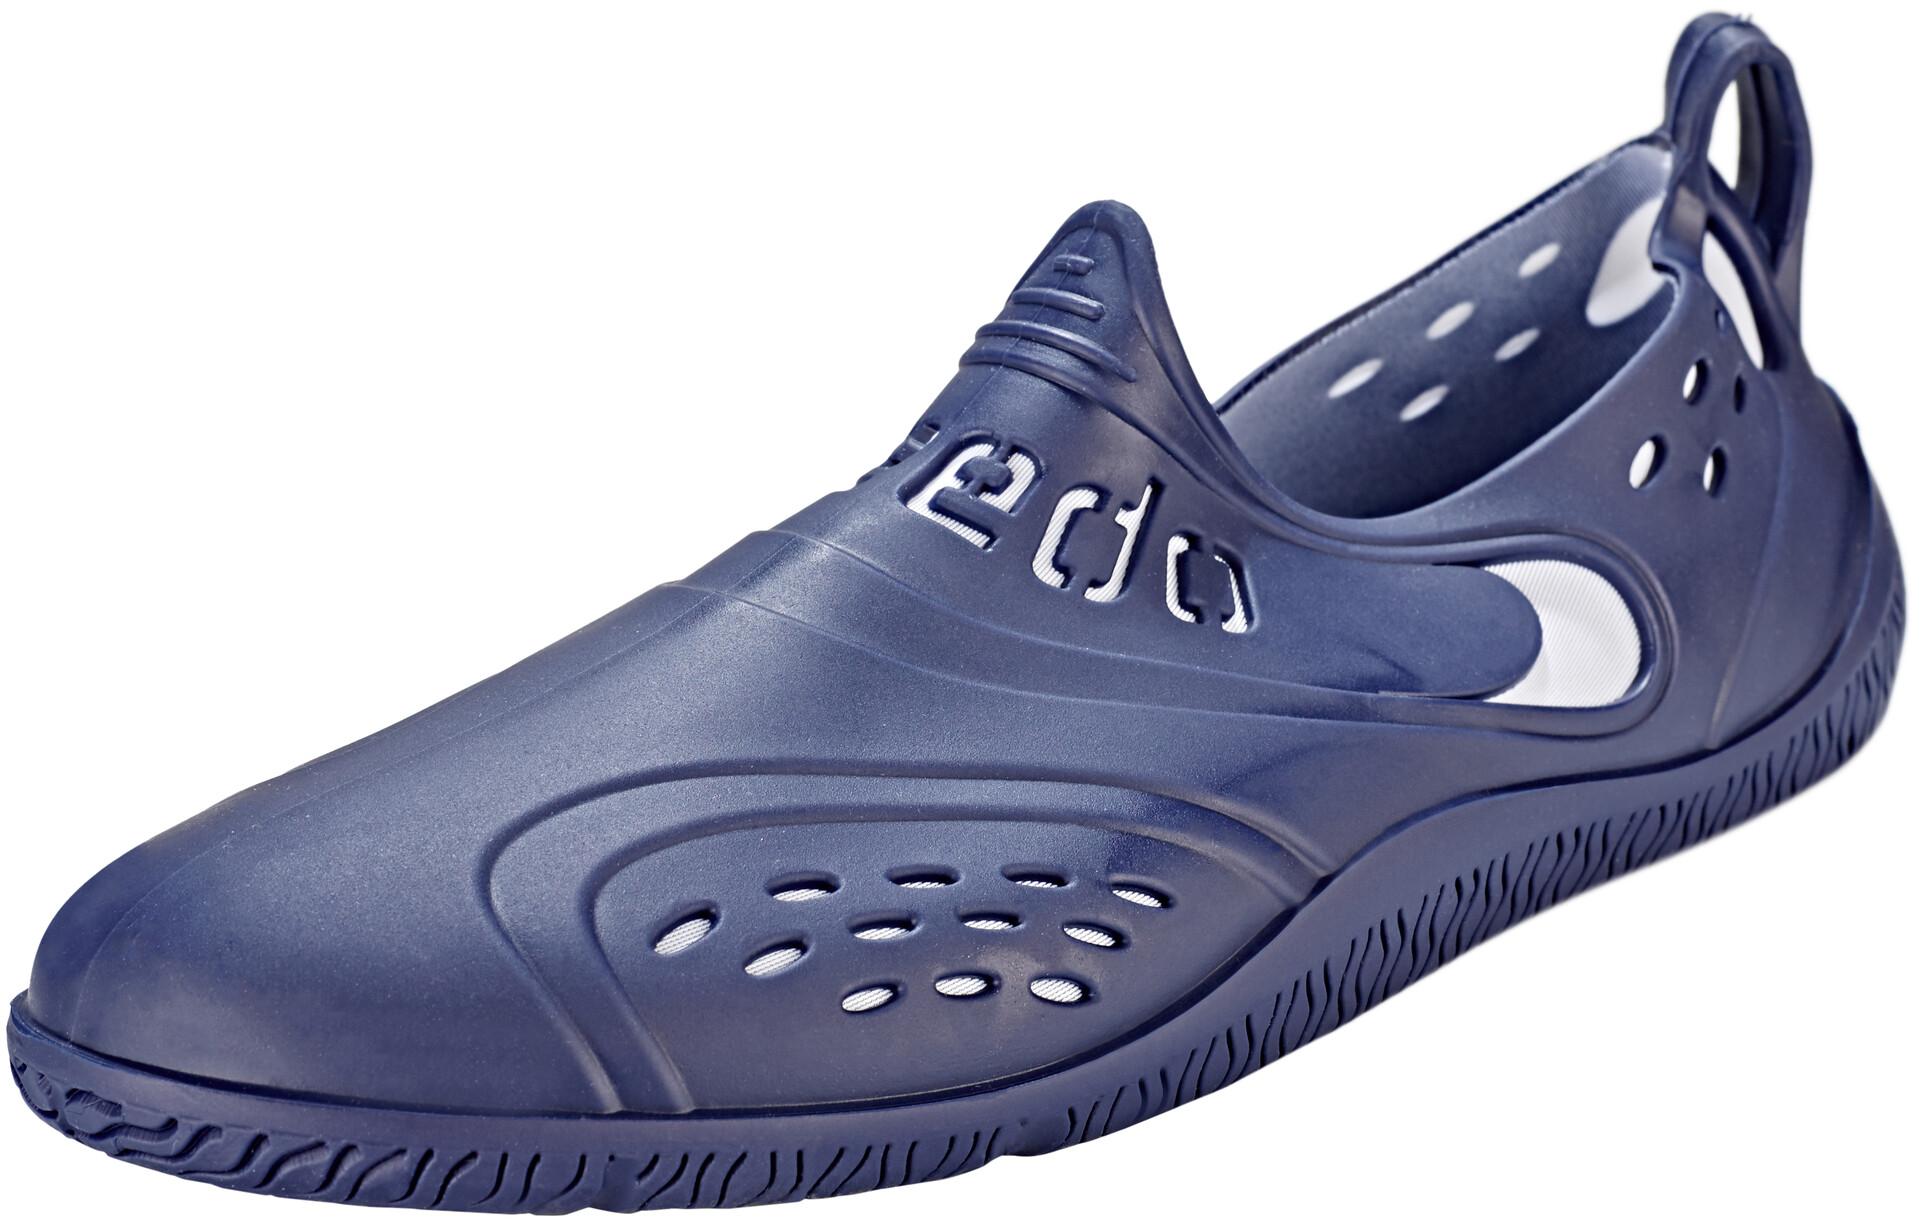 speedo swimming shoes